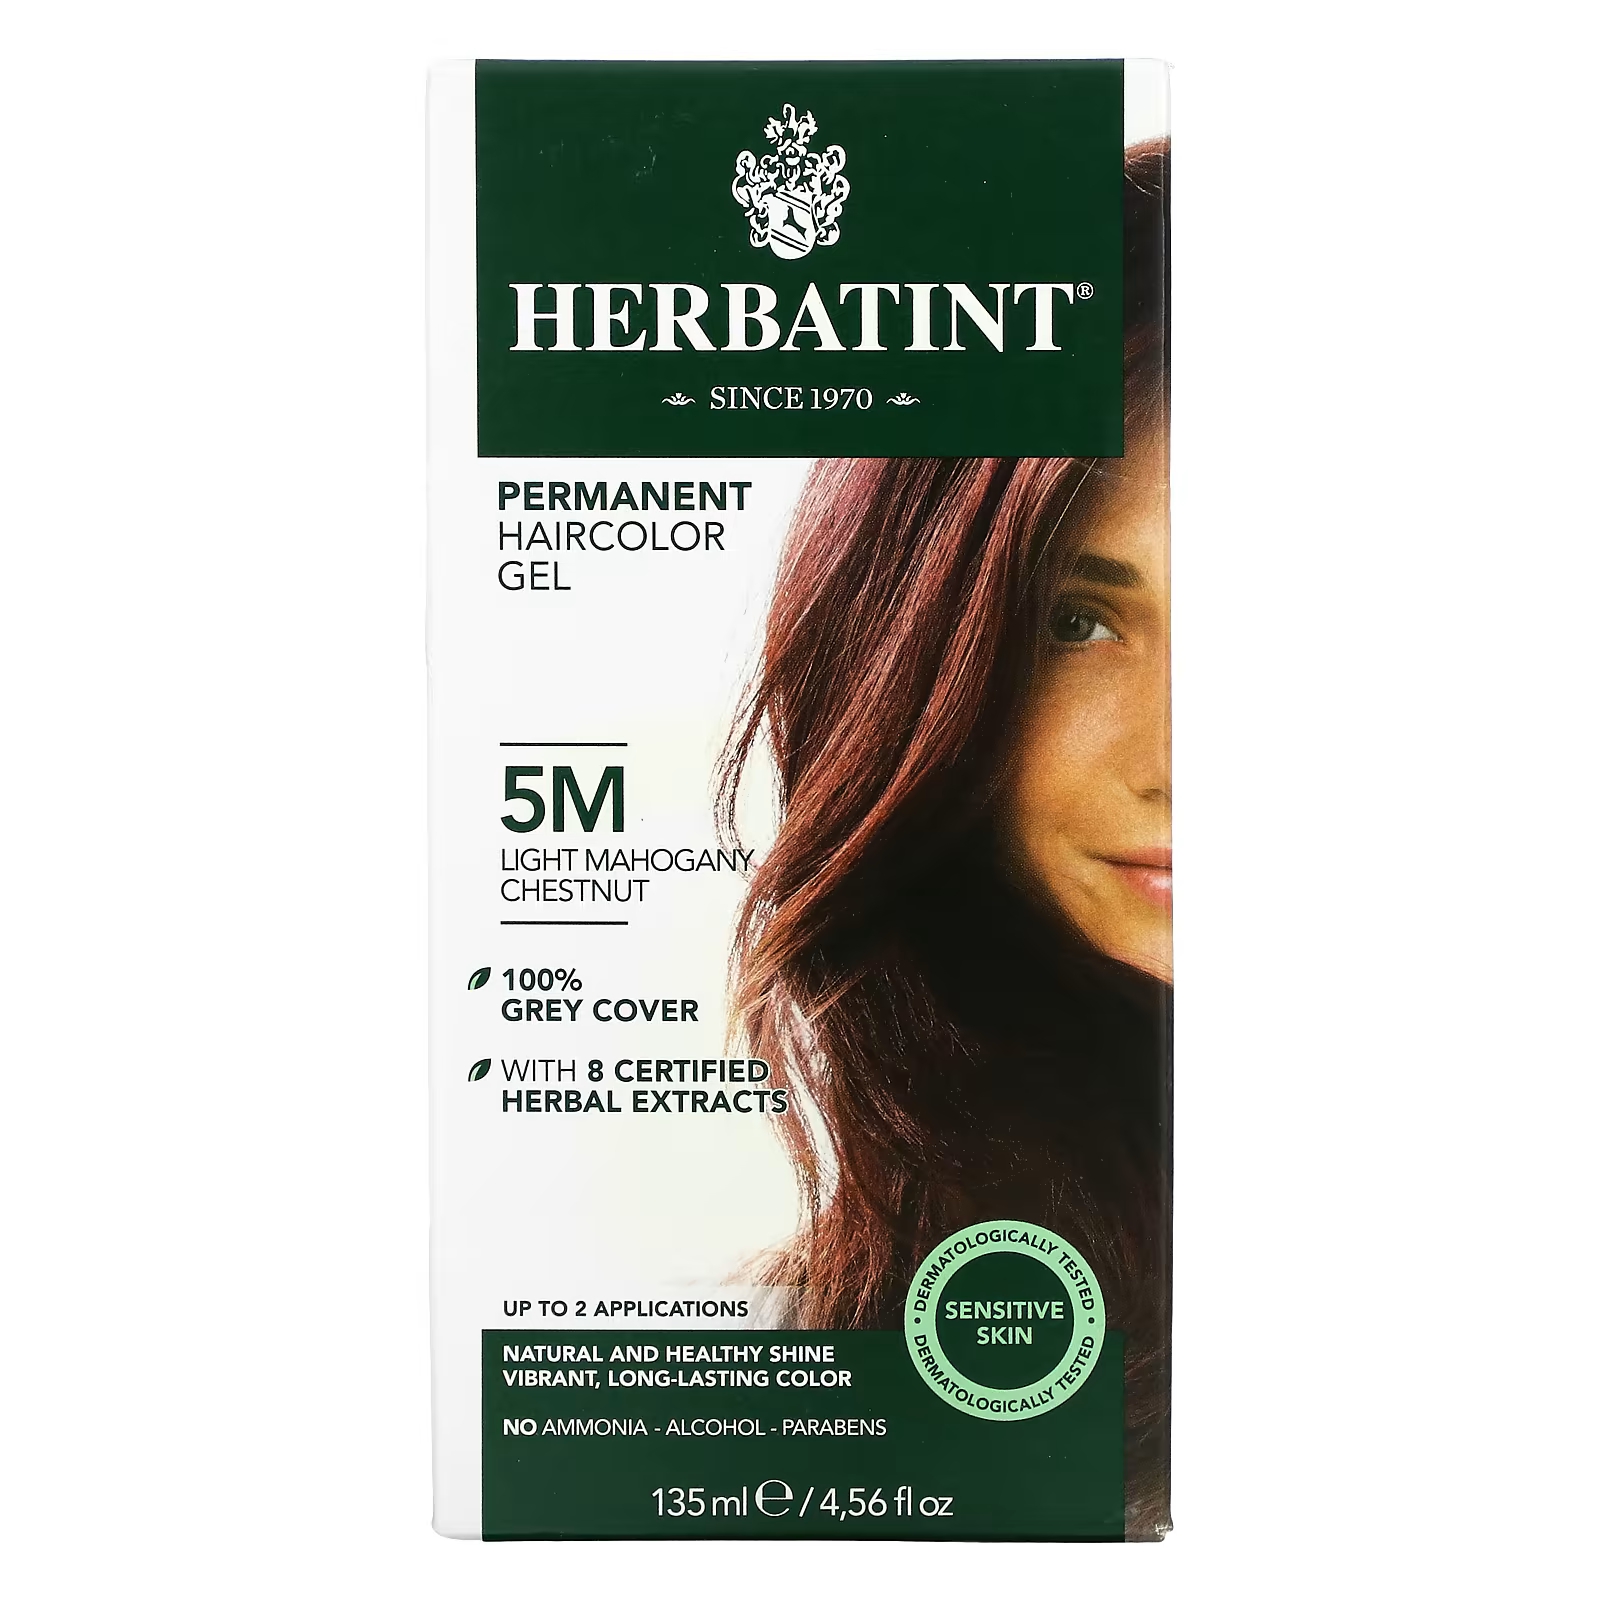 Перманентная гель-краска для волос Herbatint 5M светлый махагони-каштан, 135 мл herbatint перманентная гель краска для волос 5c светлый пепельный каштан 135 мл 4 56 жидк унции